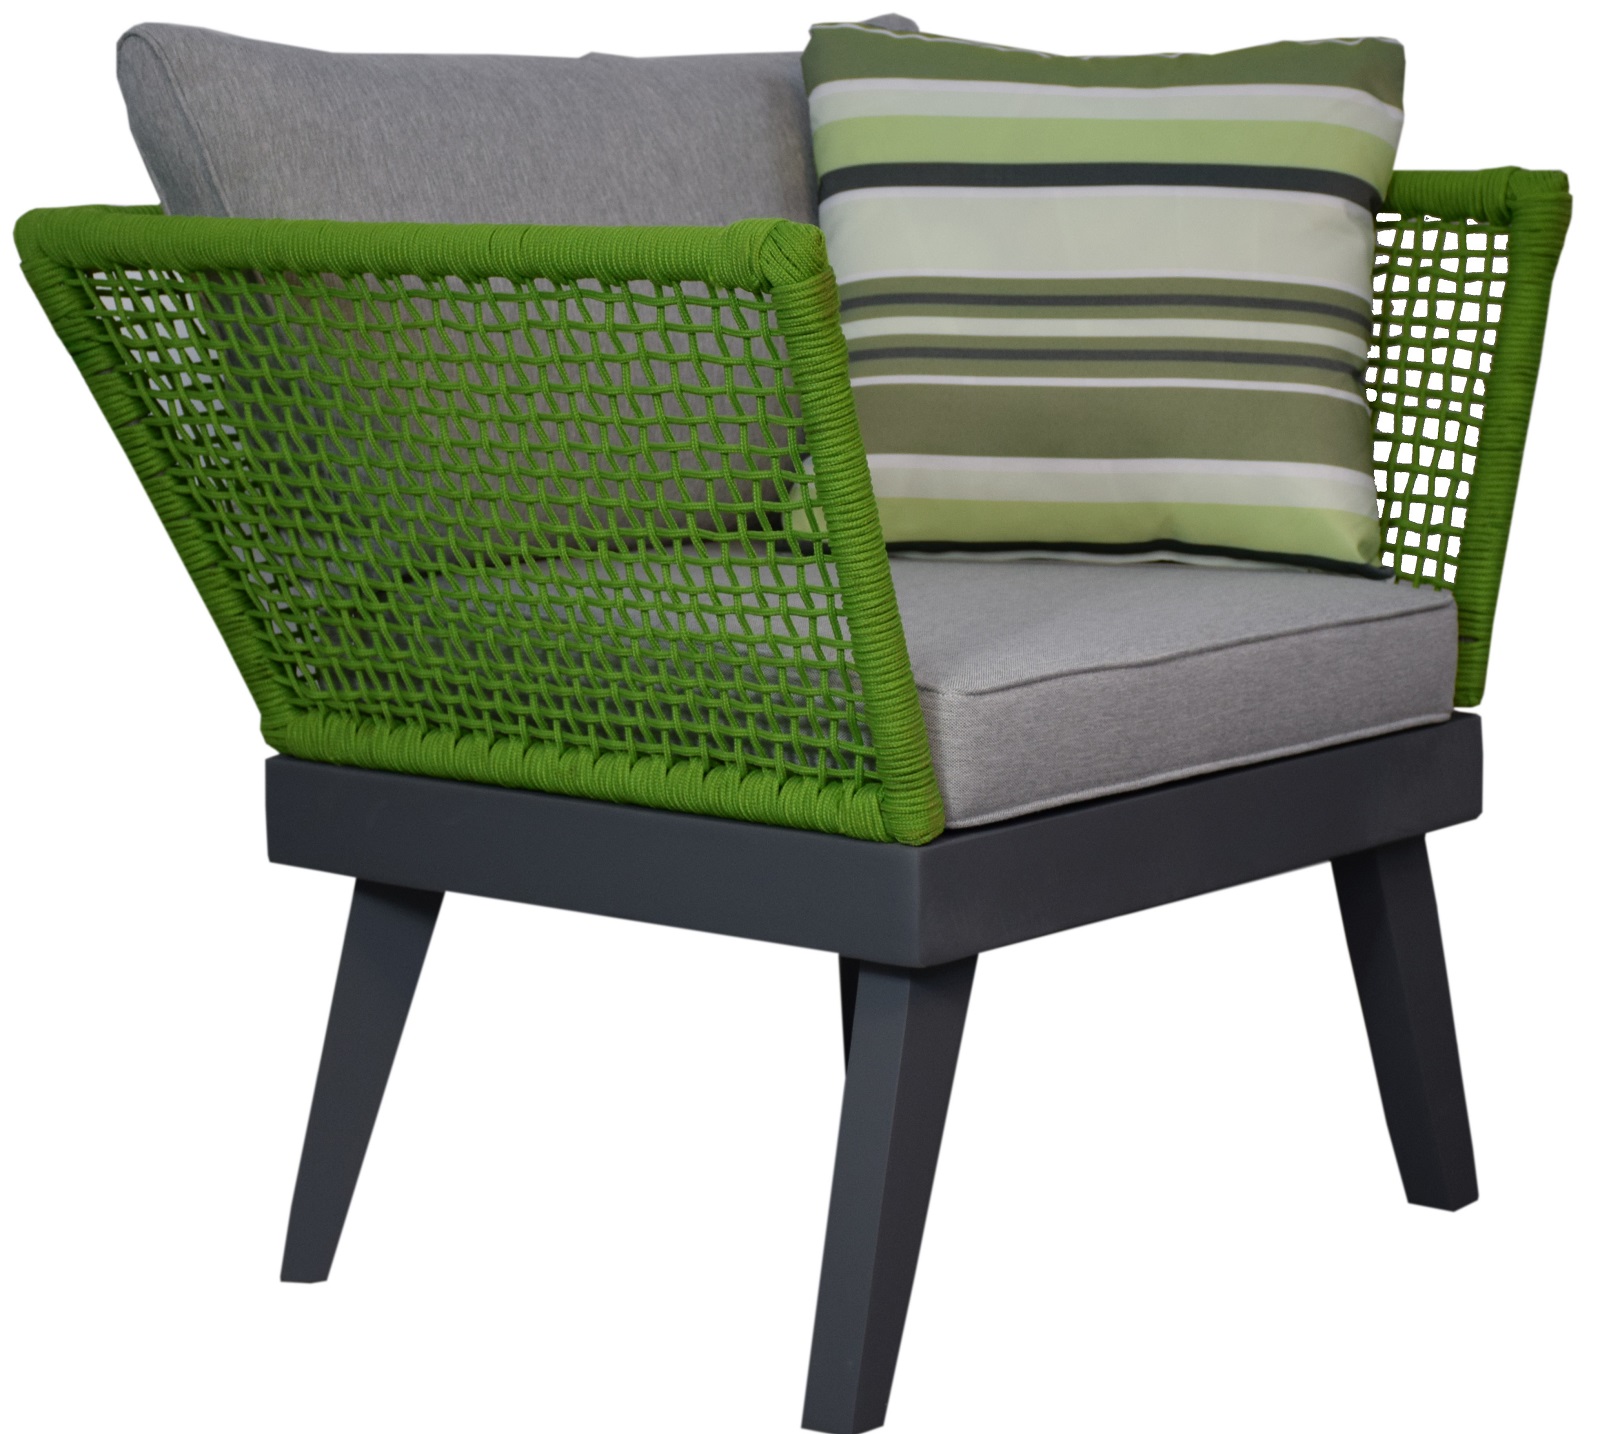 Outdoor Lounge Chair Cuba green